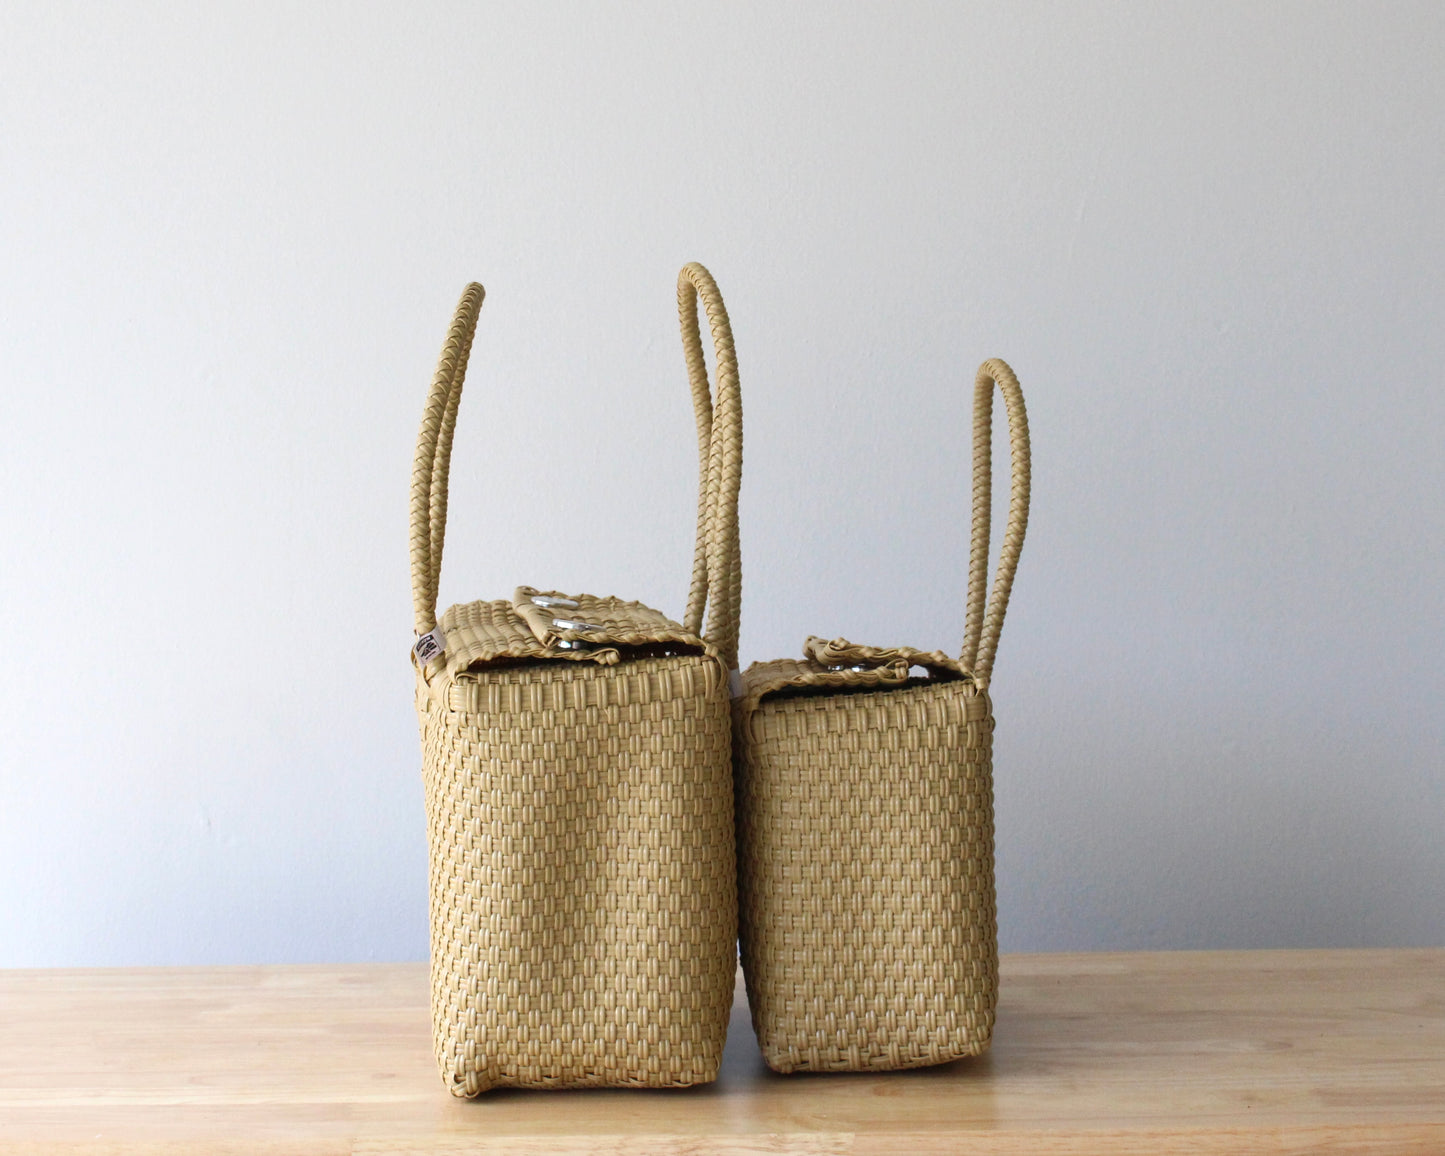 Buy 1, get 2 with 50% off: Cappuccino Handbags Bundle